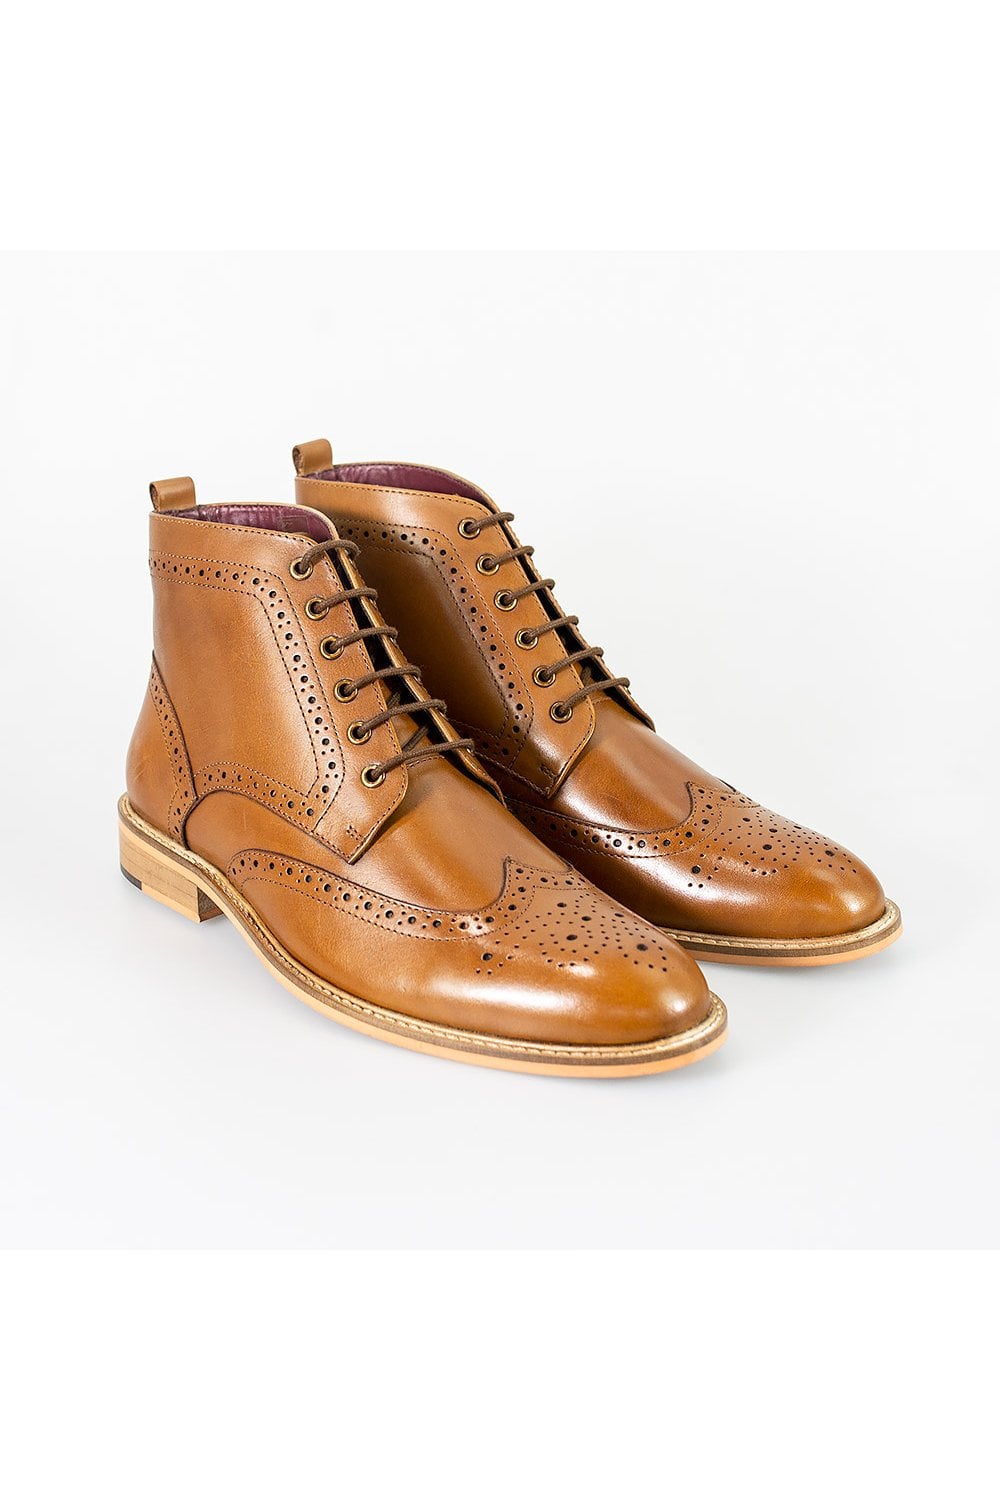 Cavani Holmes Signature topánky svetlo hnedé